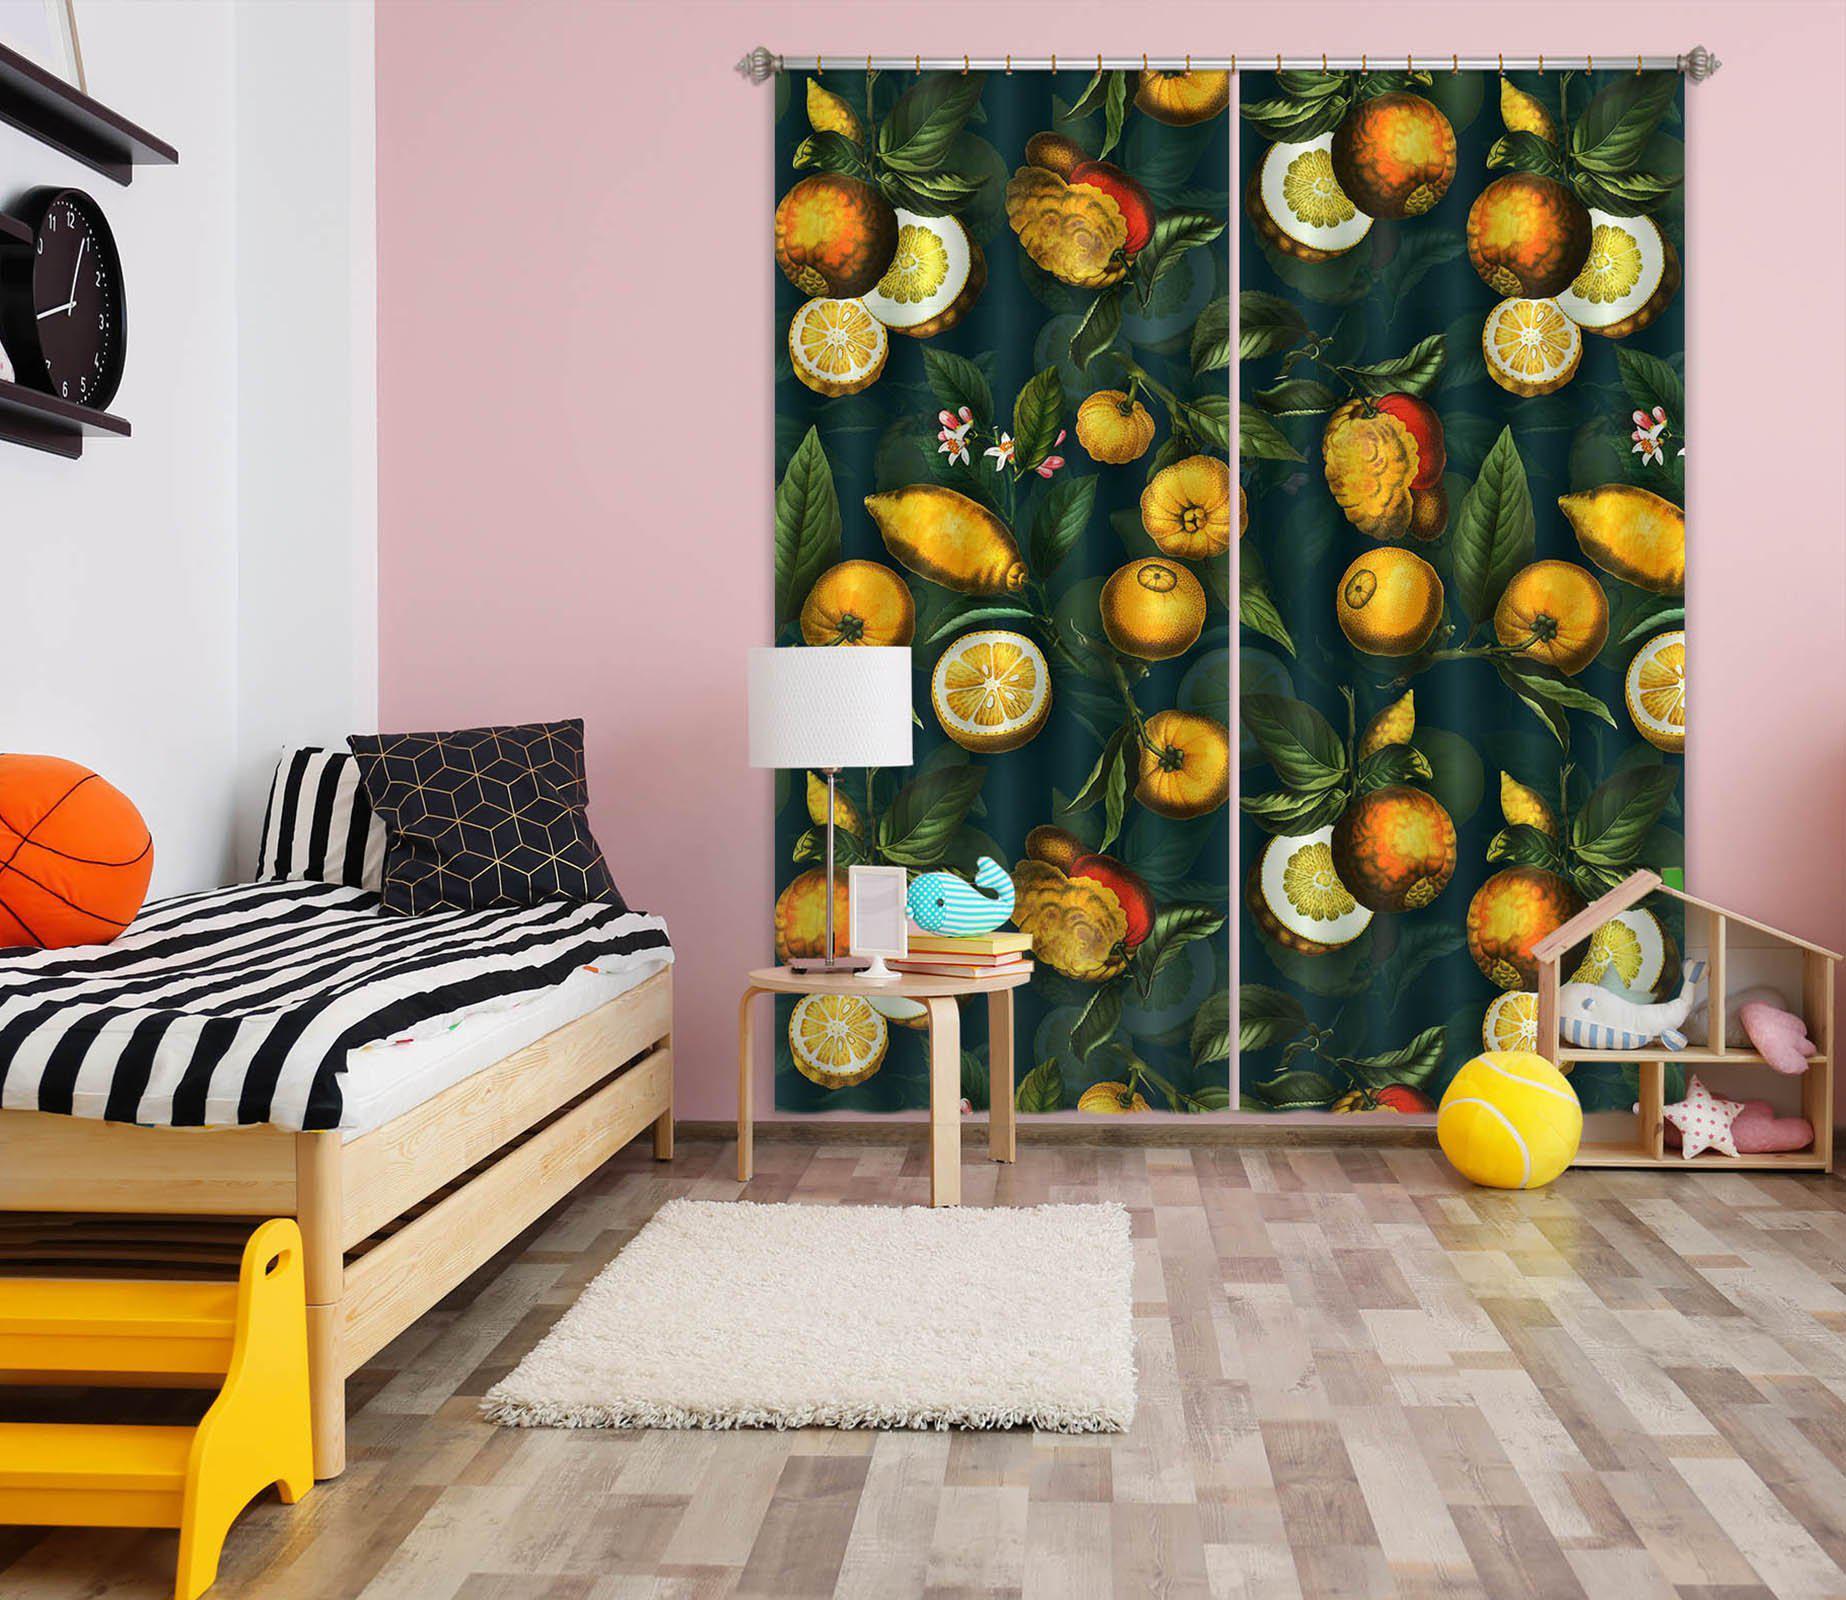 3D Golden Apple Tree 156 Uta Naumann Curtain Curtains Drapes, 203cmx160cm(WxH) 80''x 63''